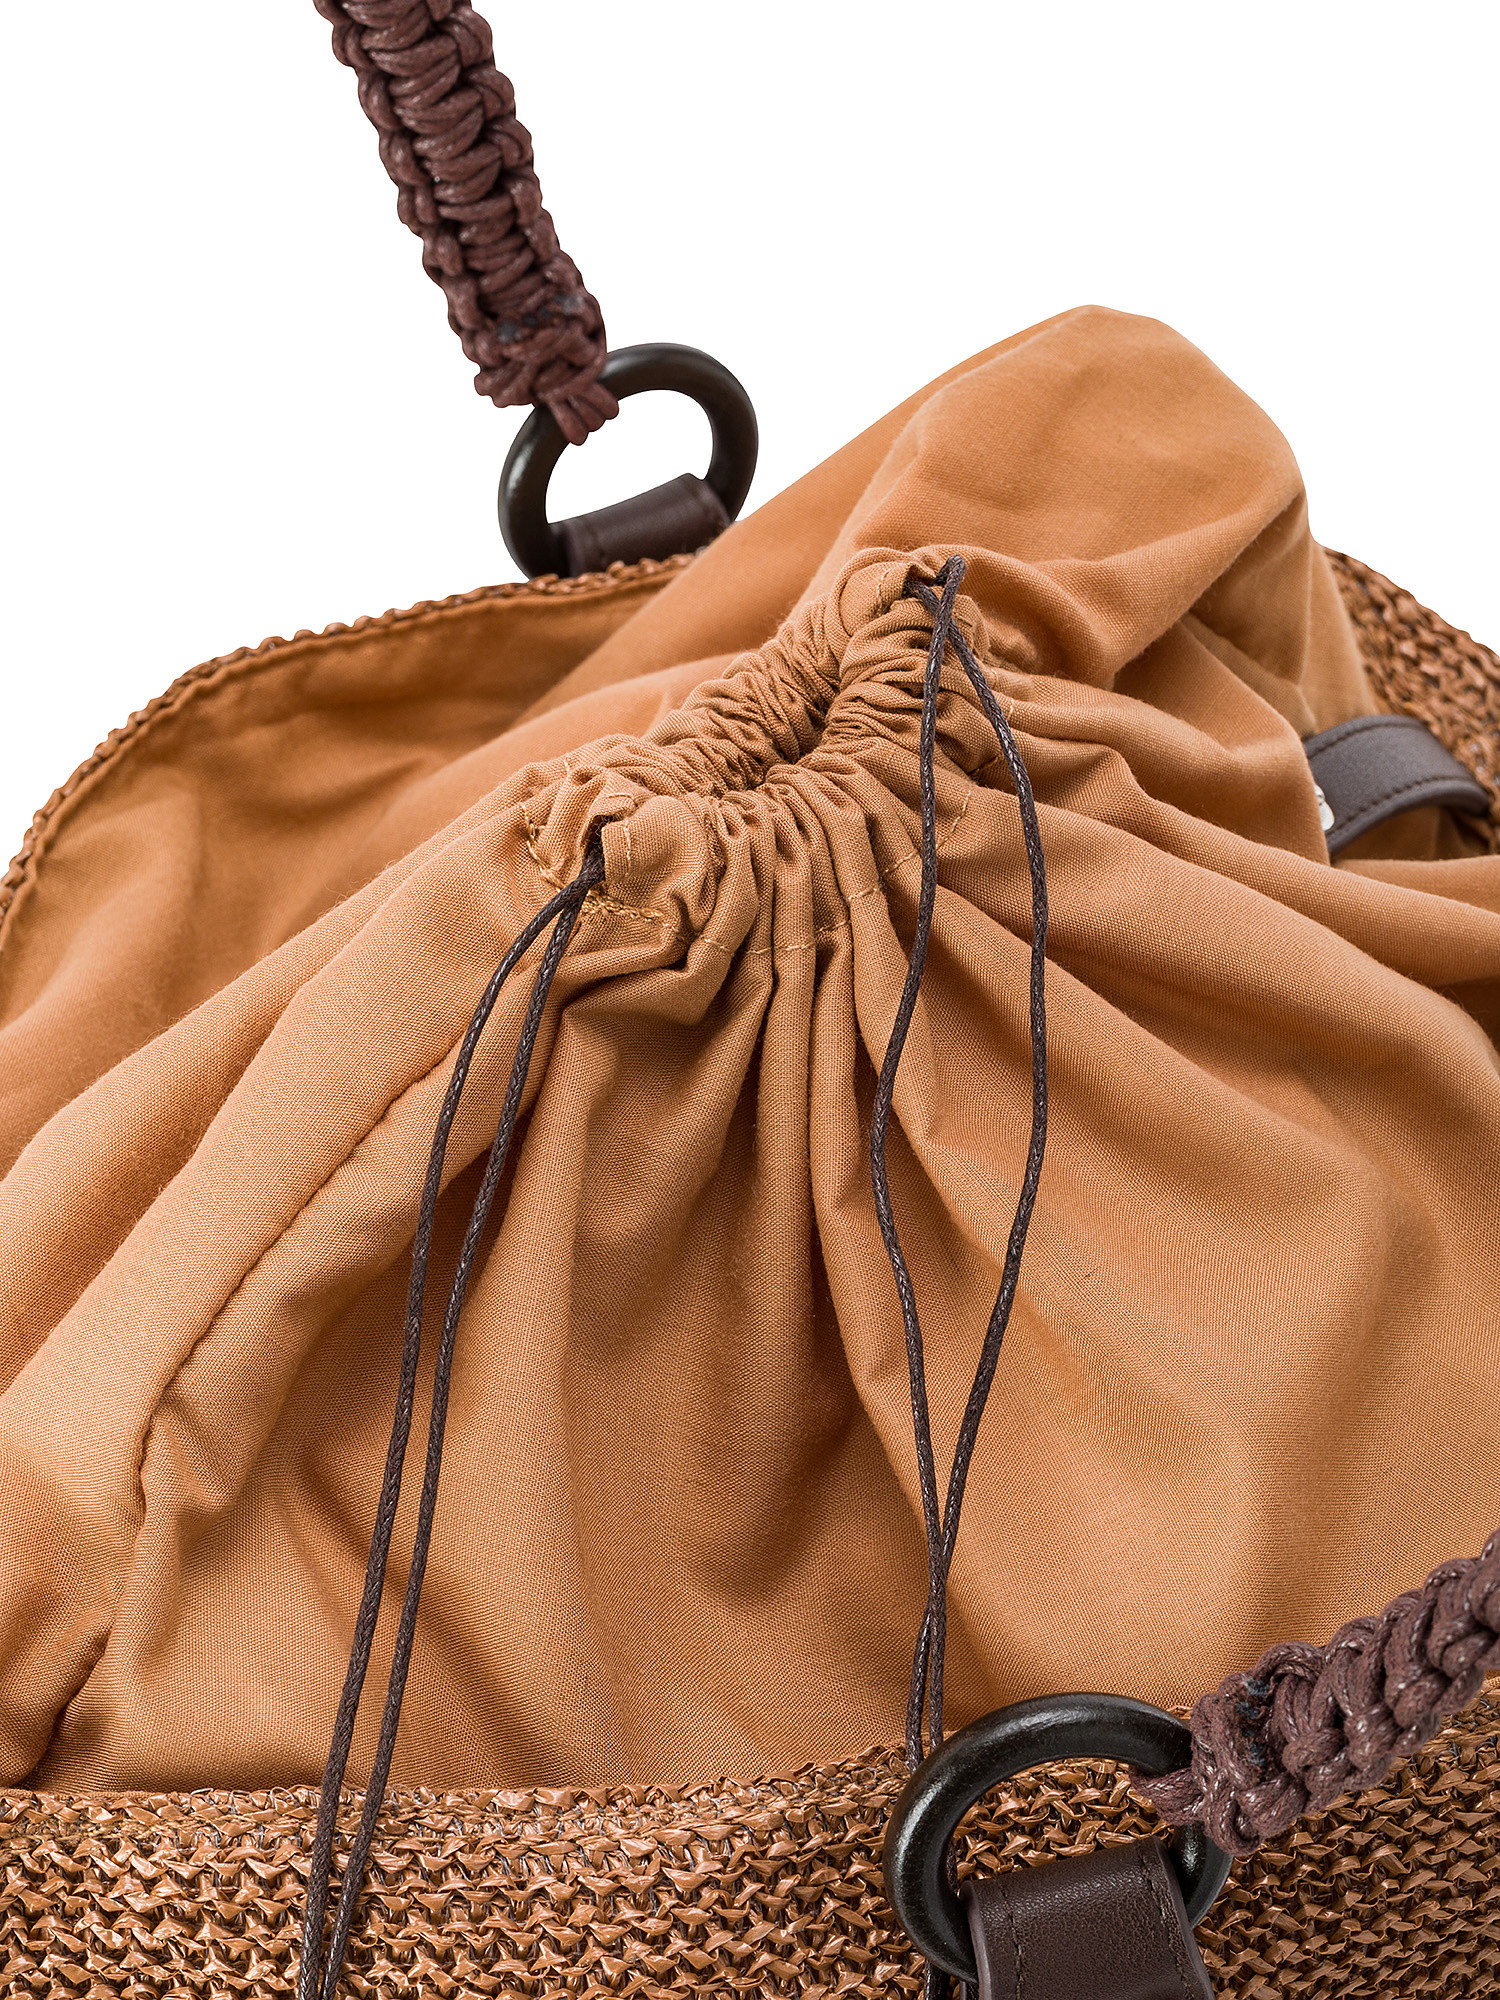 Koan - Shopping bag, Marrone, large image number 2